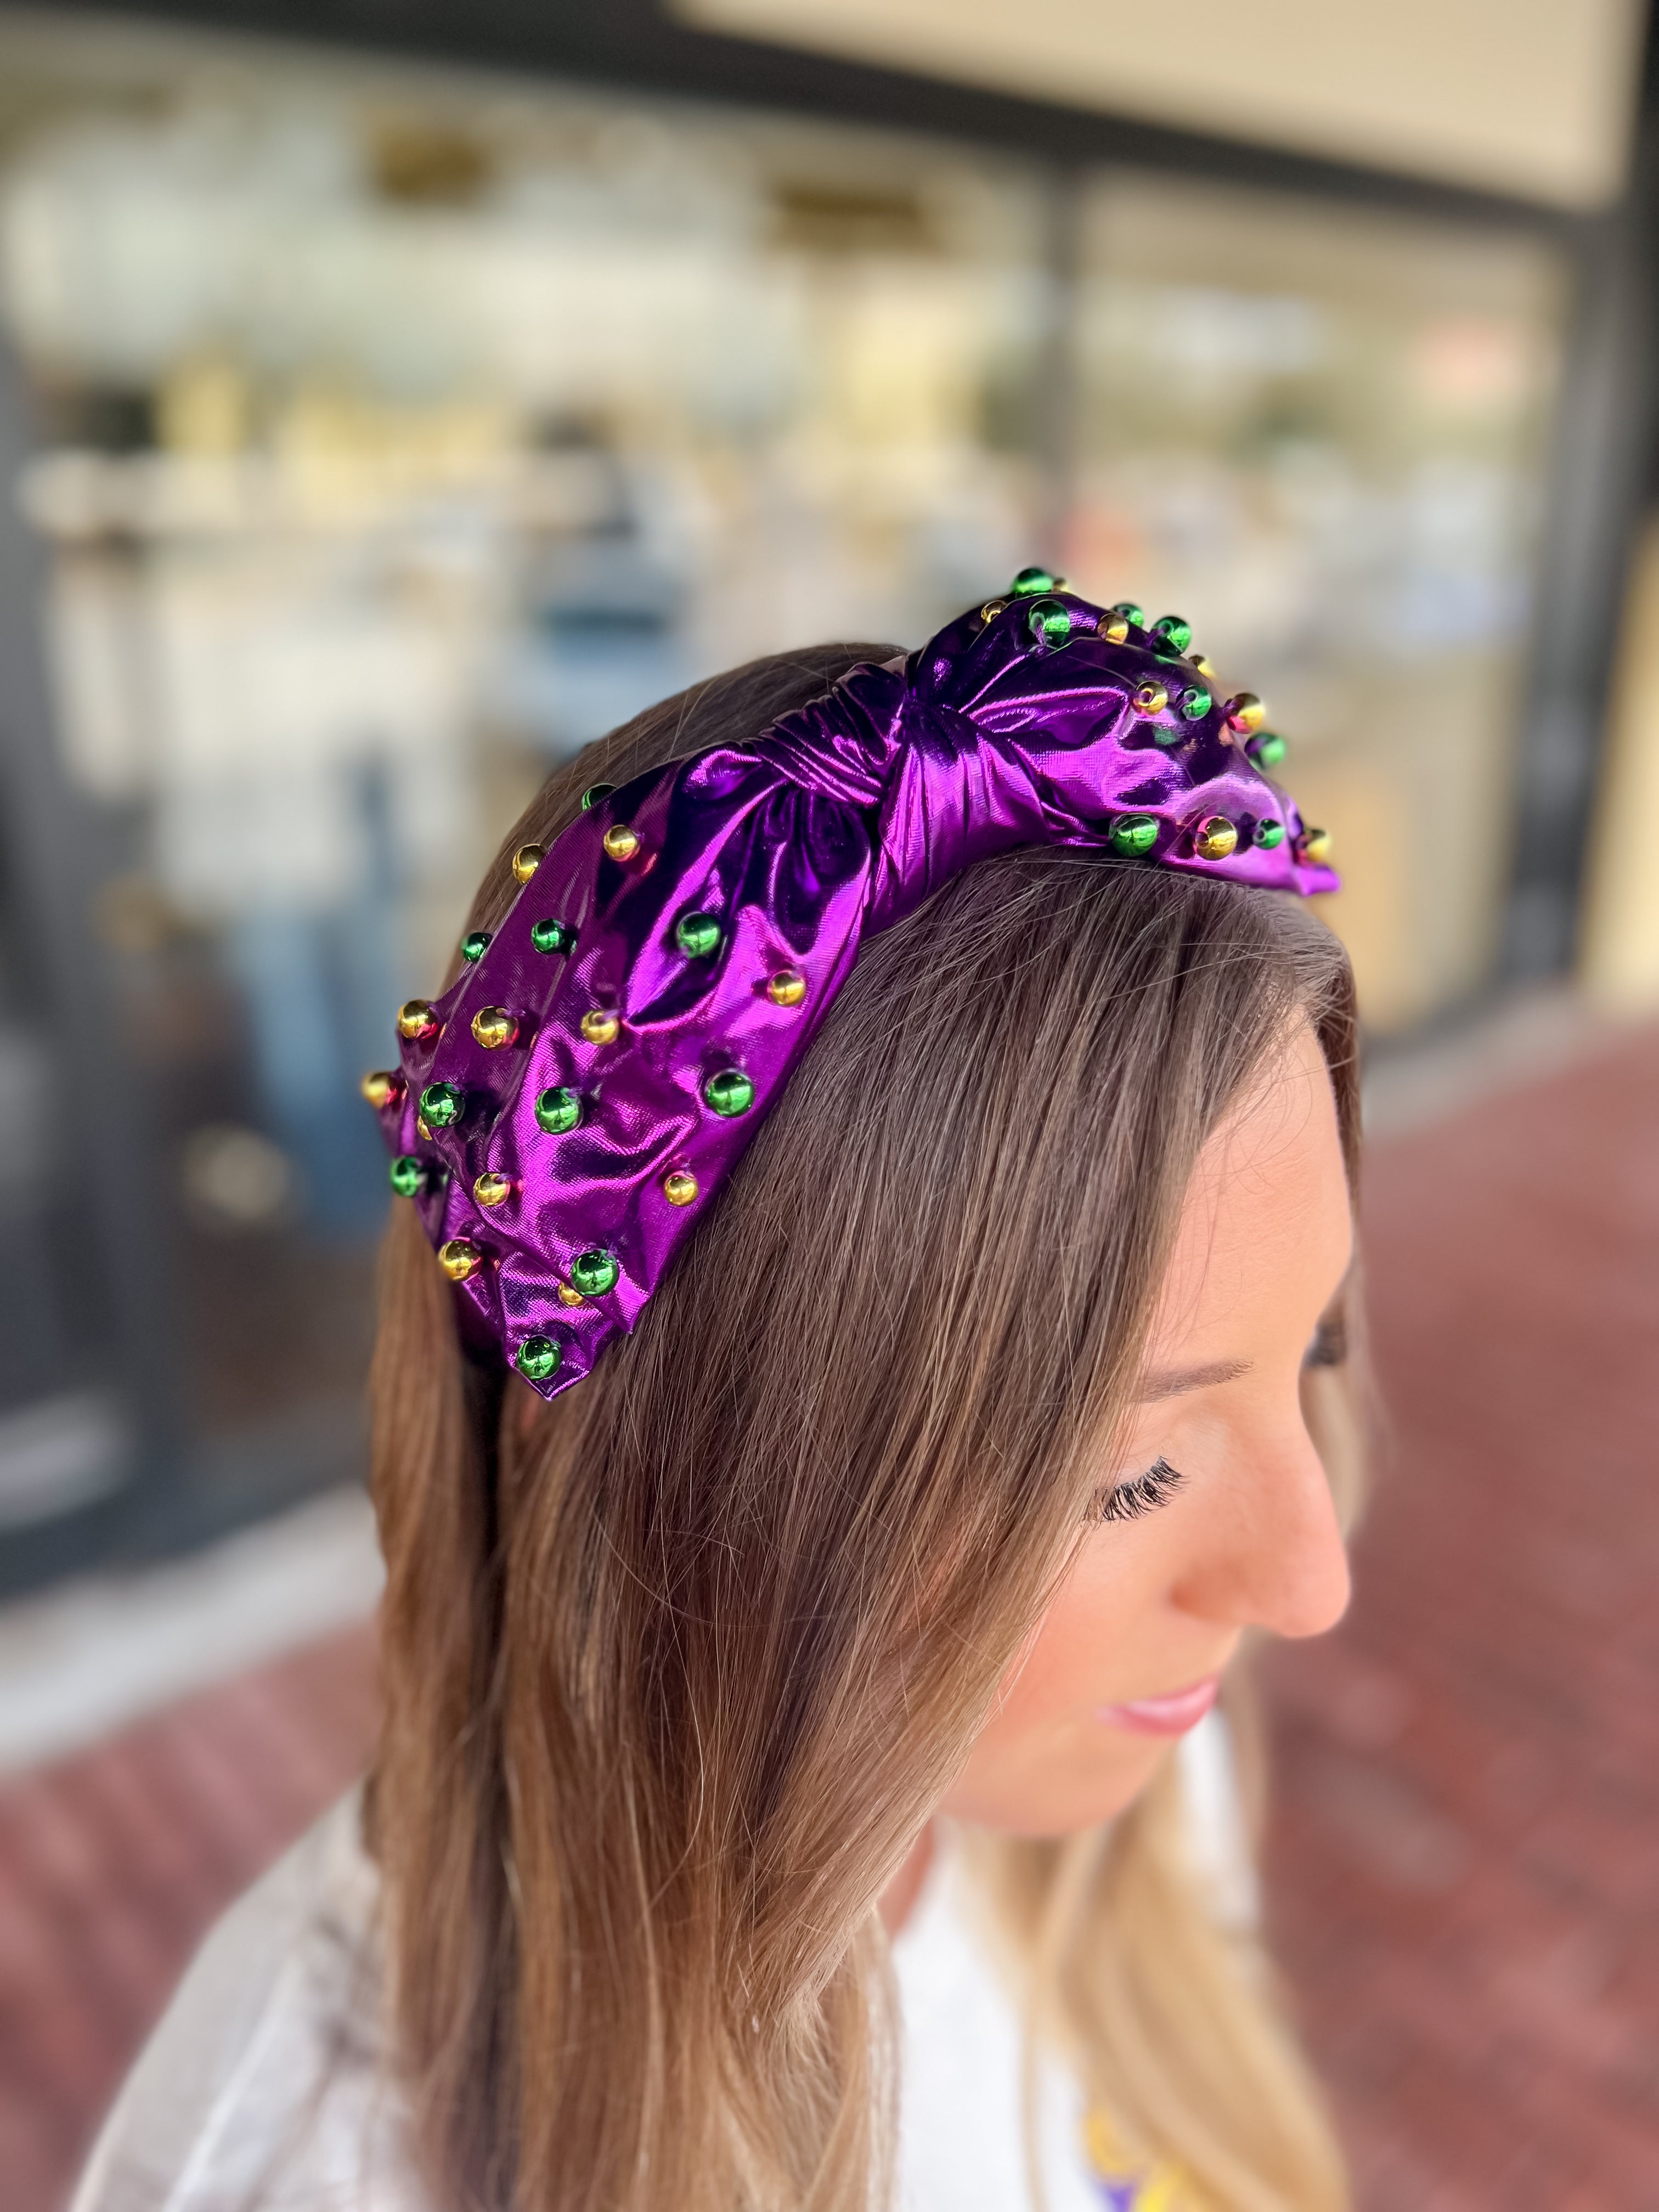 [Brianna Cannon] Purple Mardi Gras Bow Headband